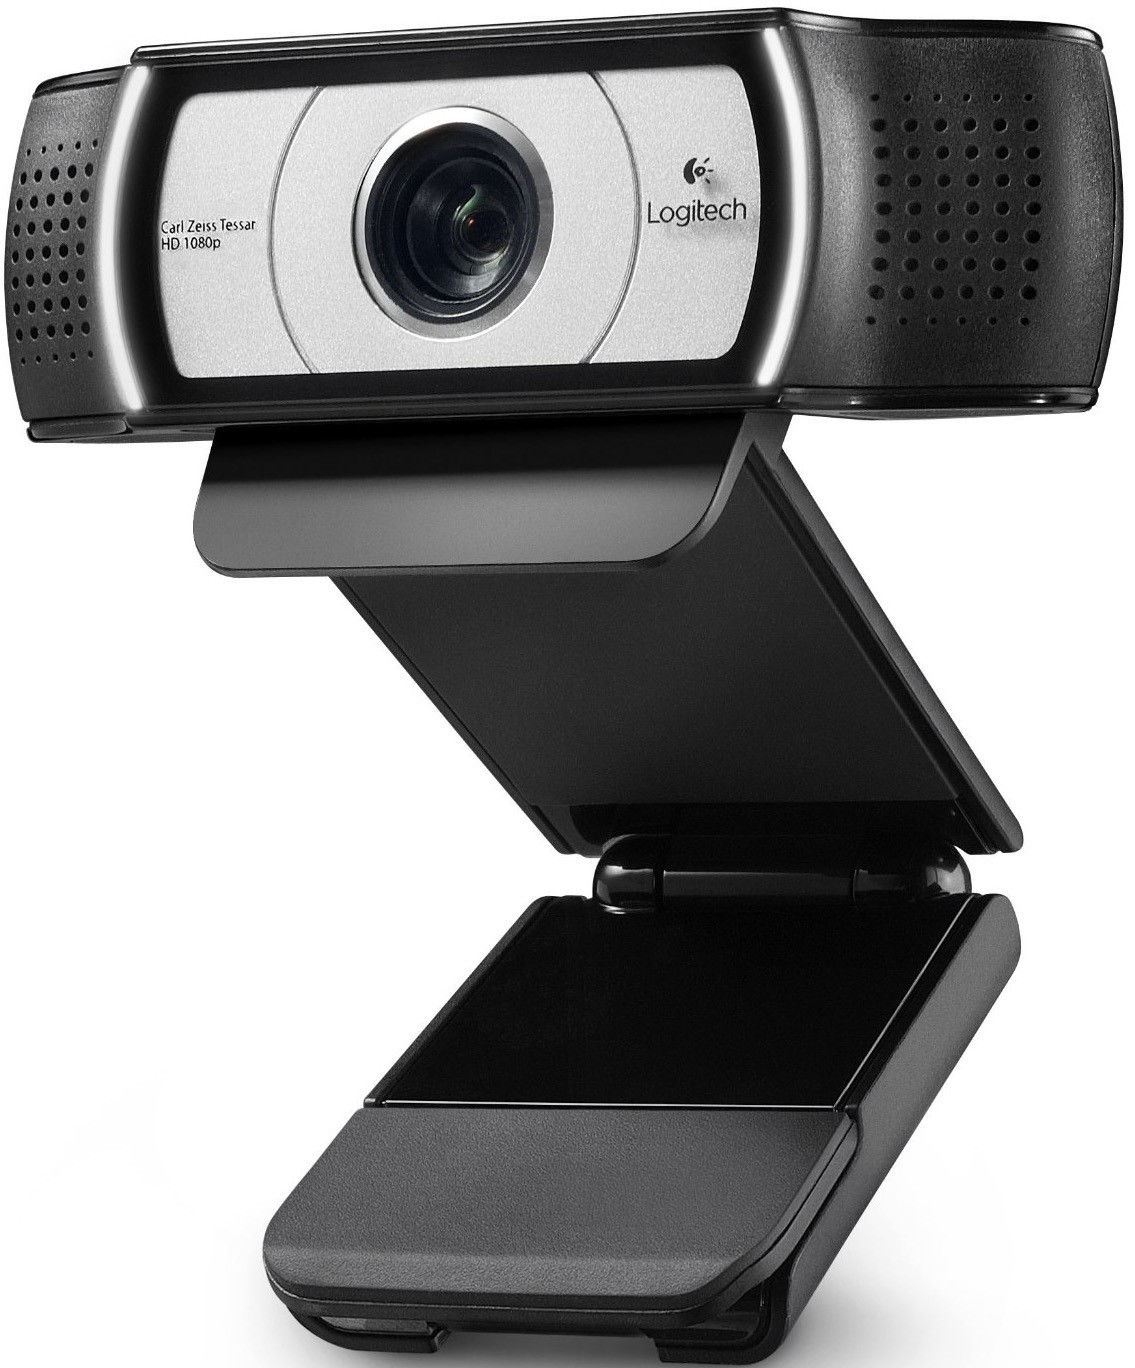 Webcams For Mac